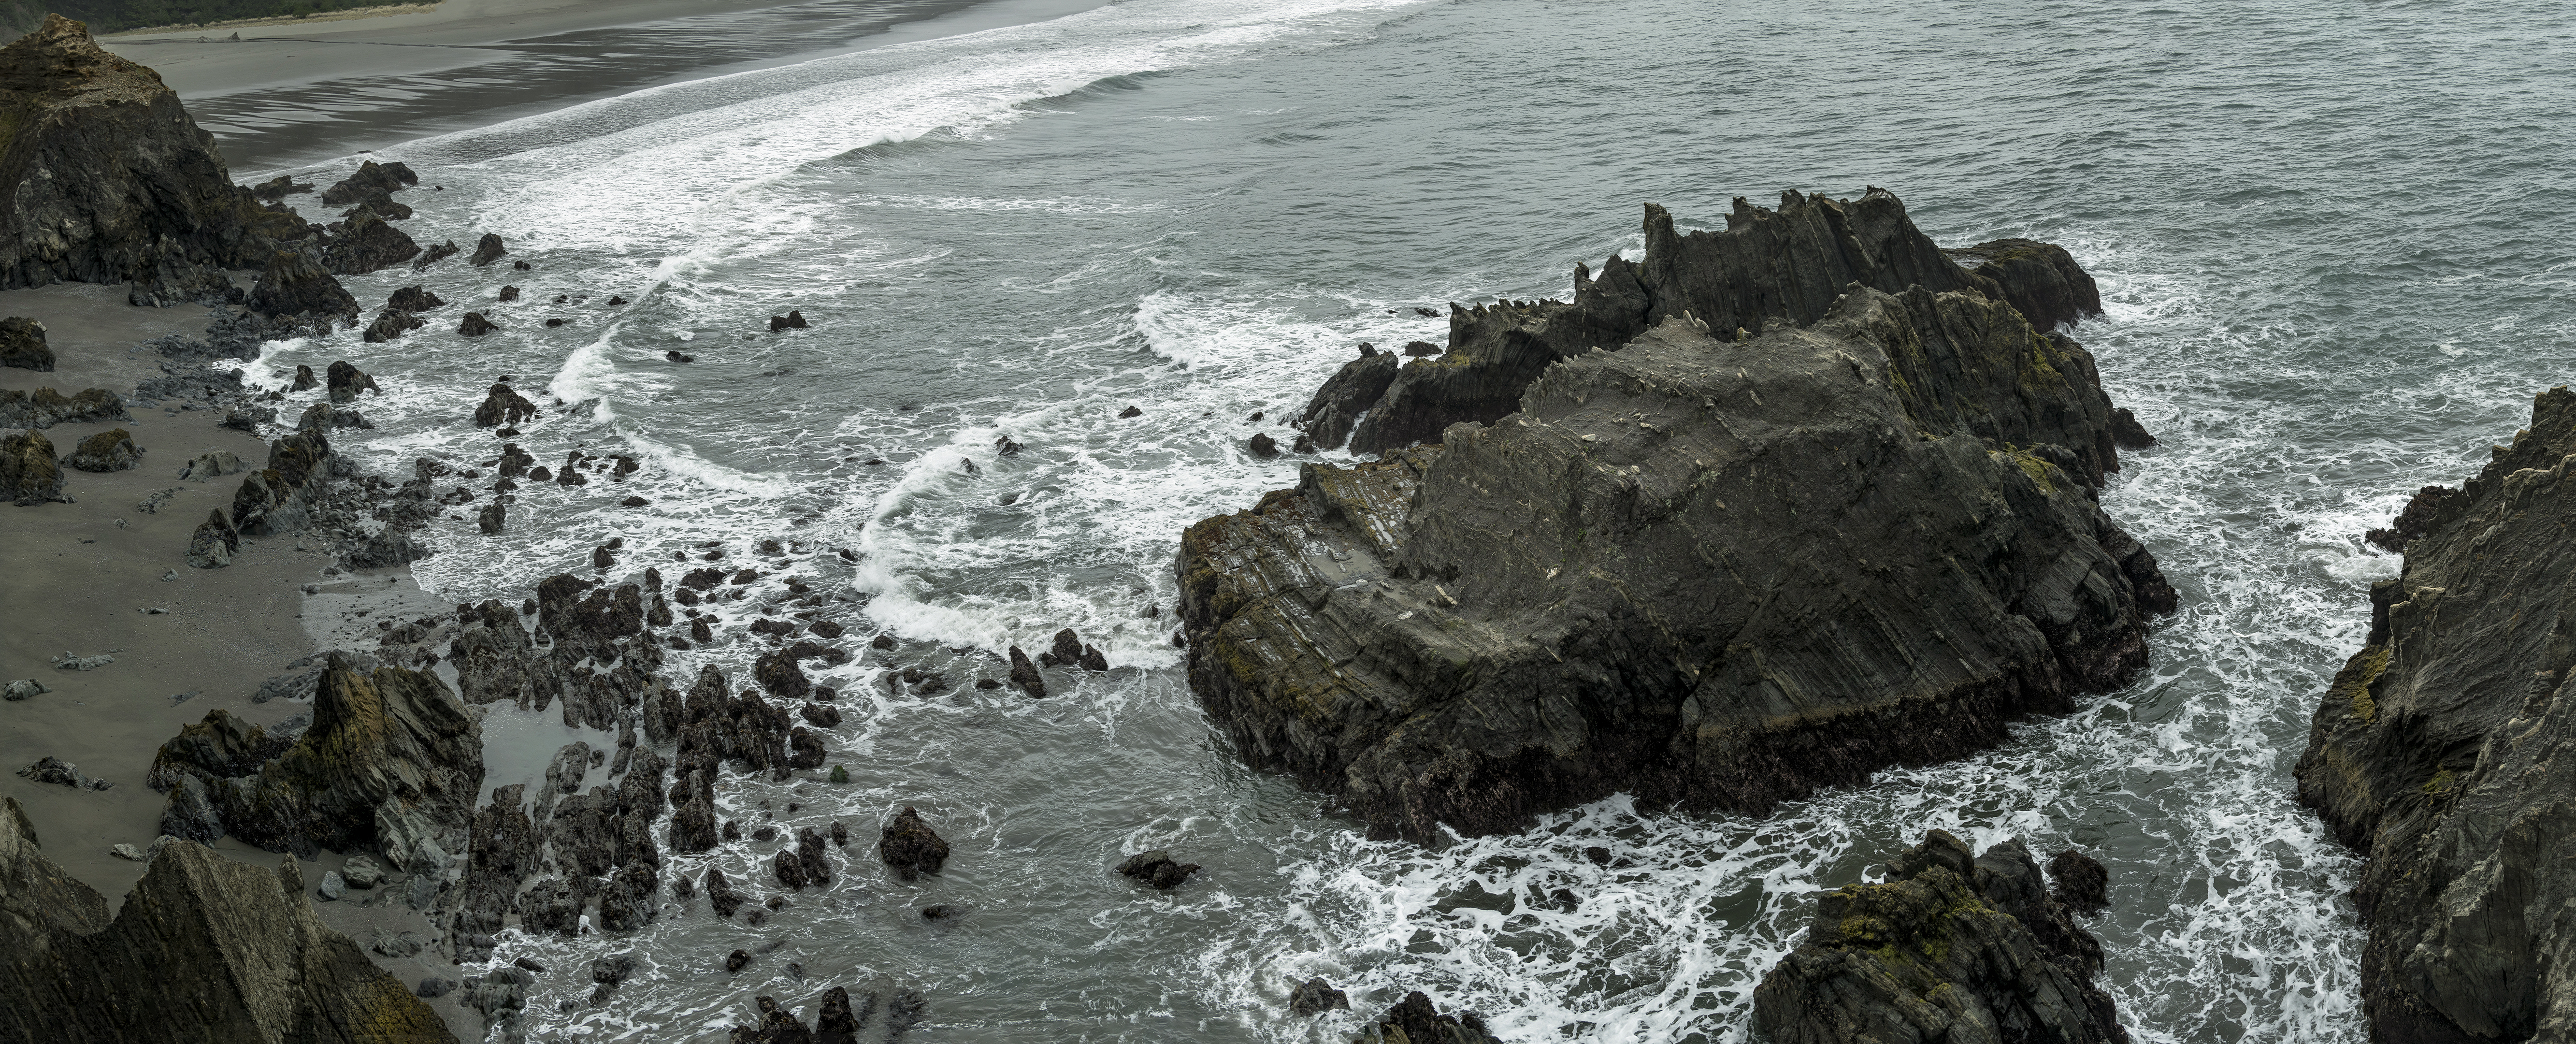 10-photo photomerge gold beach otter point